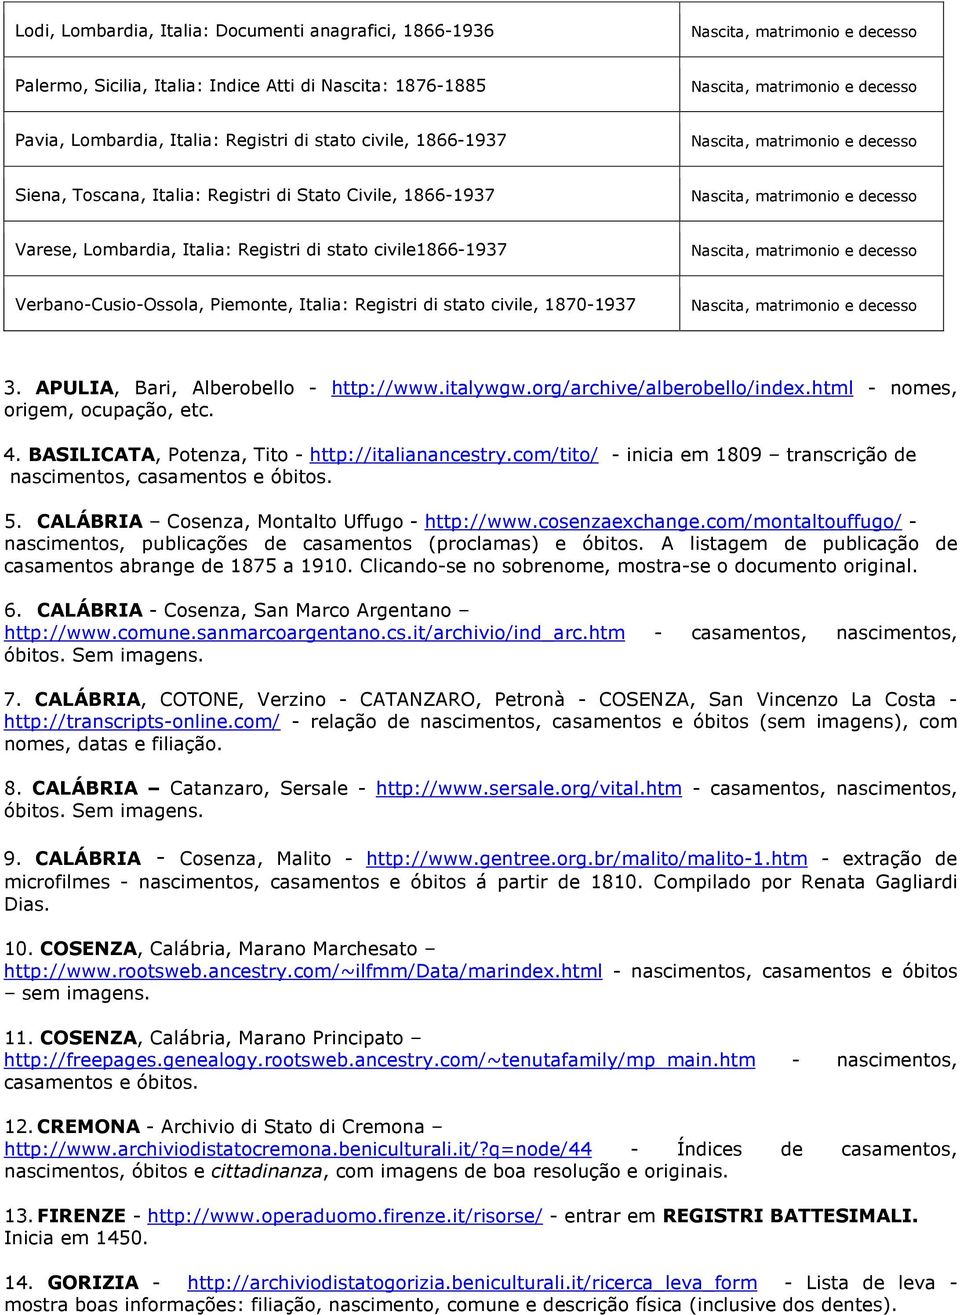 APULIA, Bari, Alberobello - http://www.italywgw.org/archive/alberobello/index.html - nomes, origem, ocupação, etc. 4. BASILICATA, Potenza, Tito - http://italianancestry.